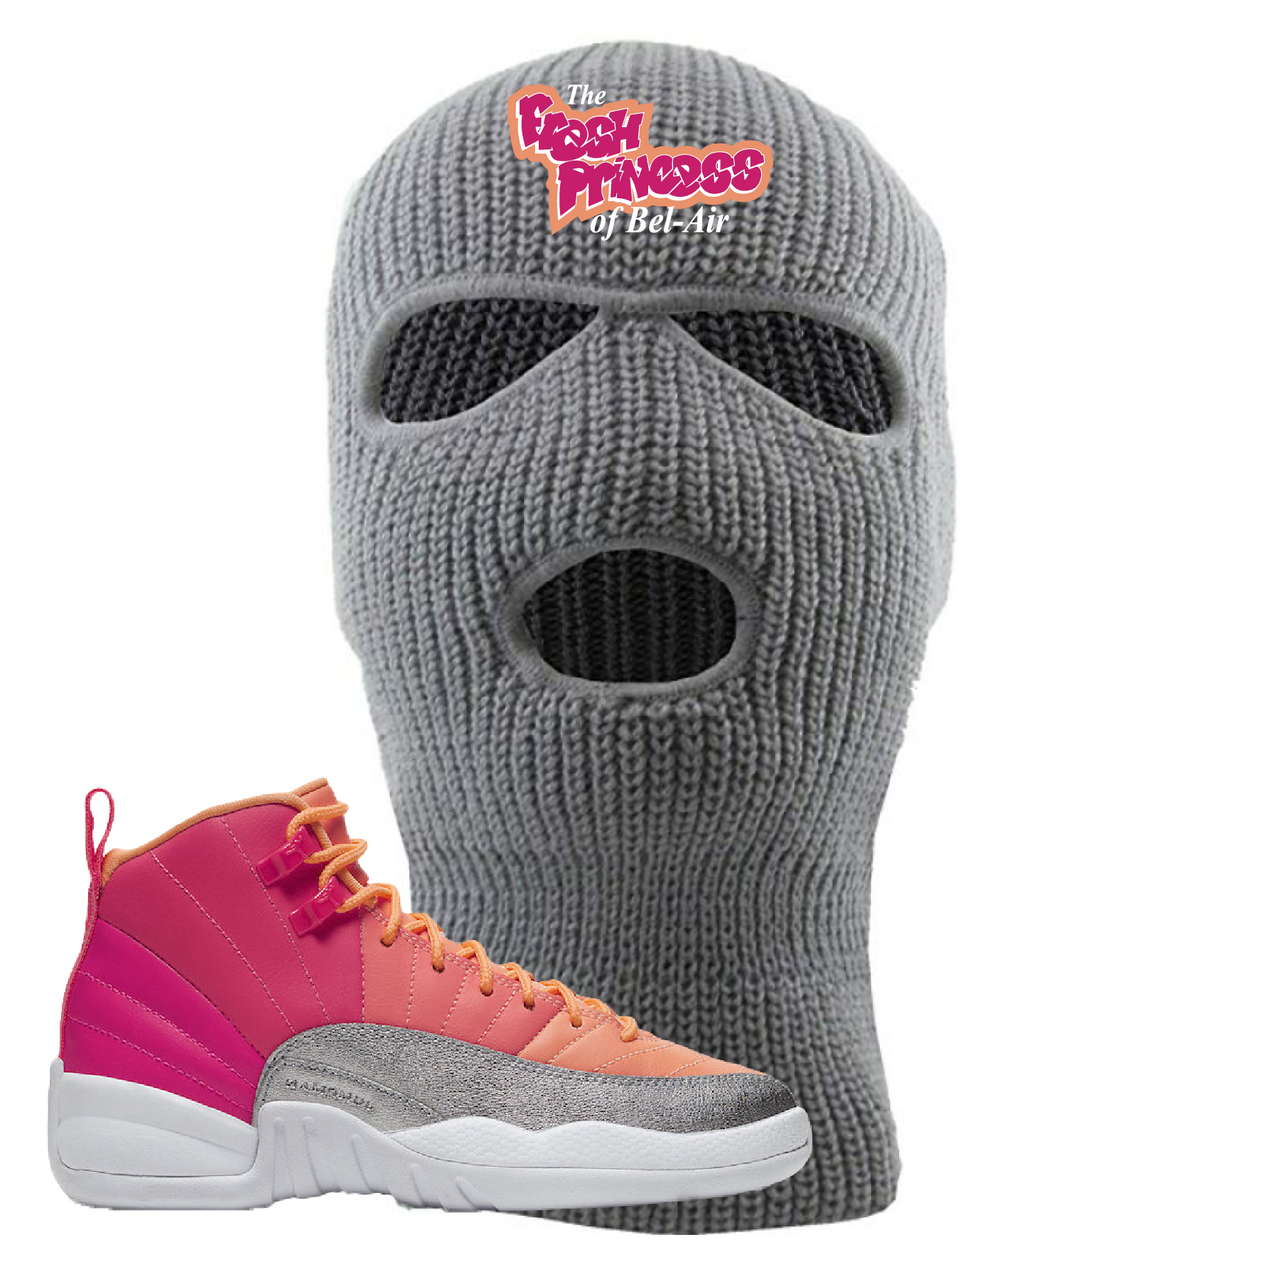 Jordan 12 GS Hot Punch Fresh Princess of Bel Air Light Gray Sneaker Hook Up Ski Mask